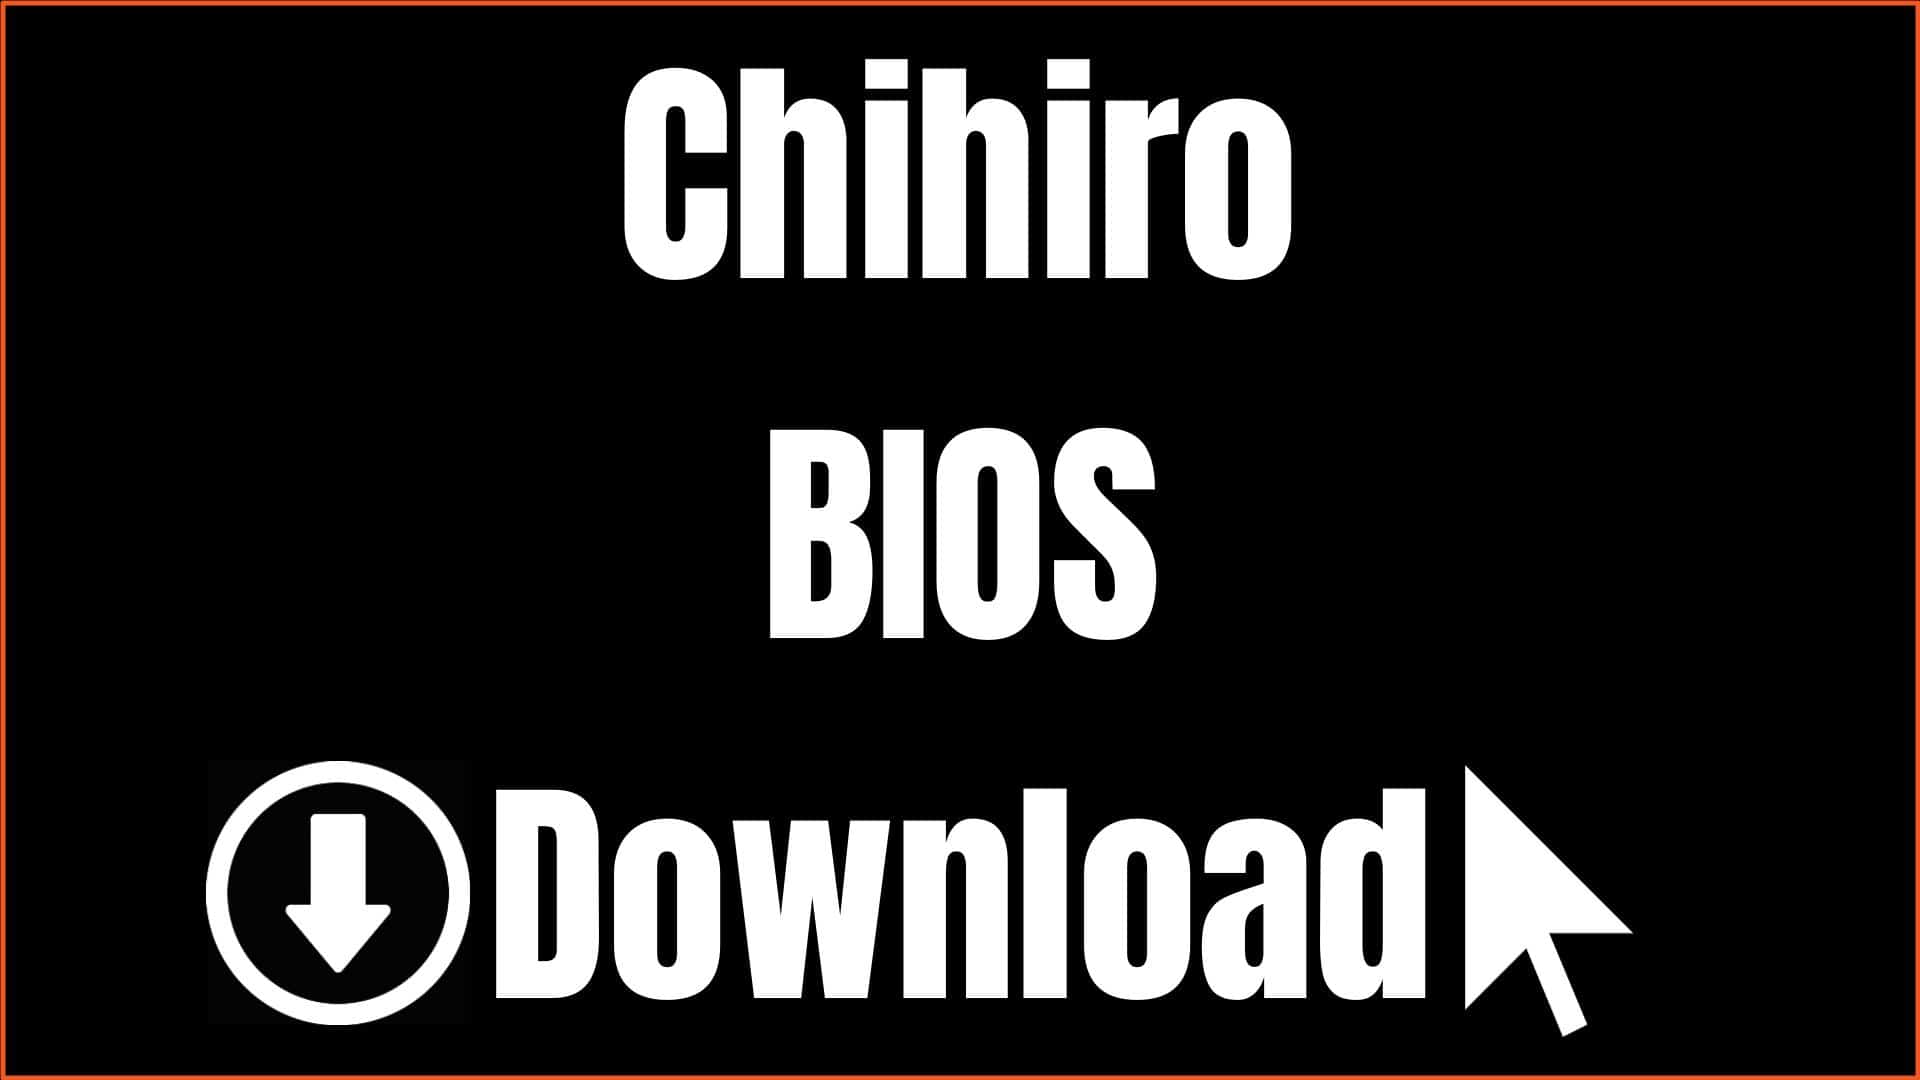 Chihiro BIOS Download